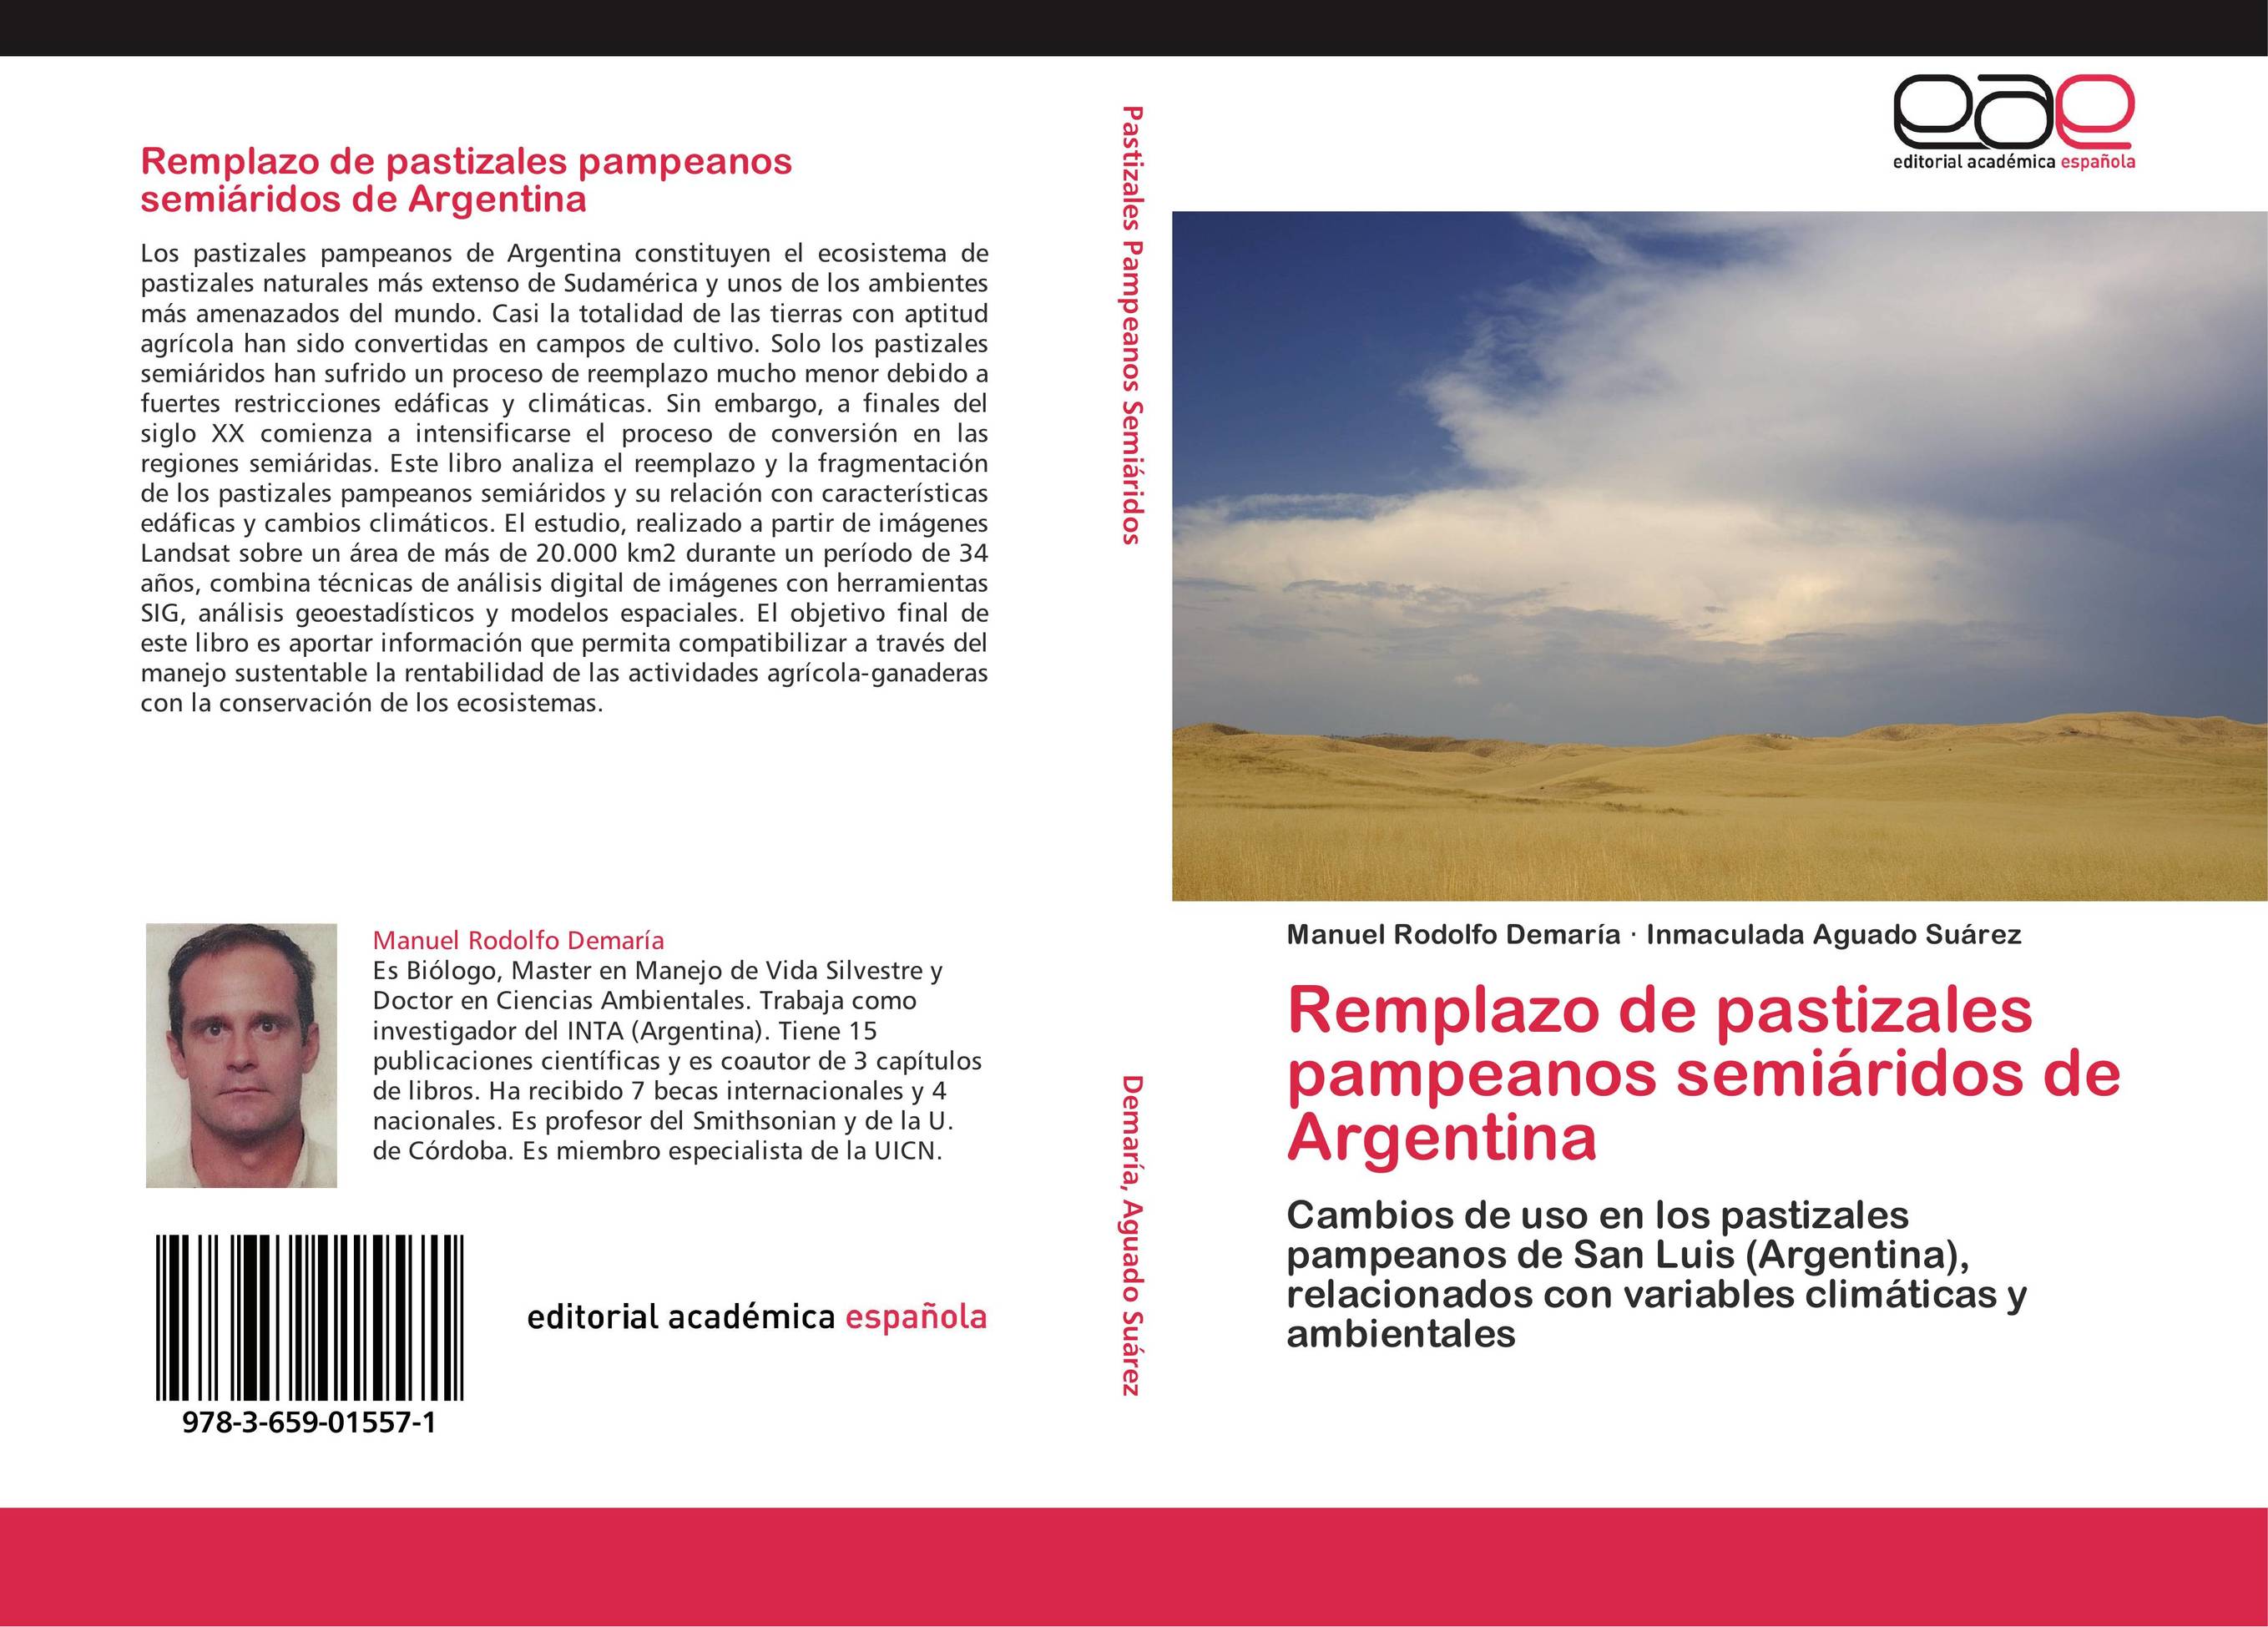 Remplazo de pastizales pampeanos semiáridos de Argentina